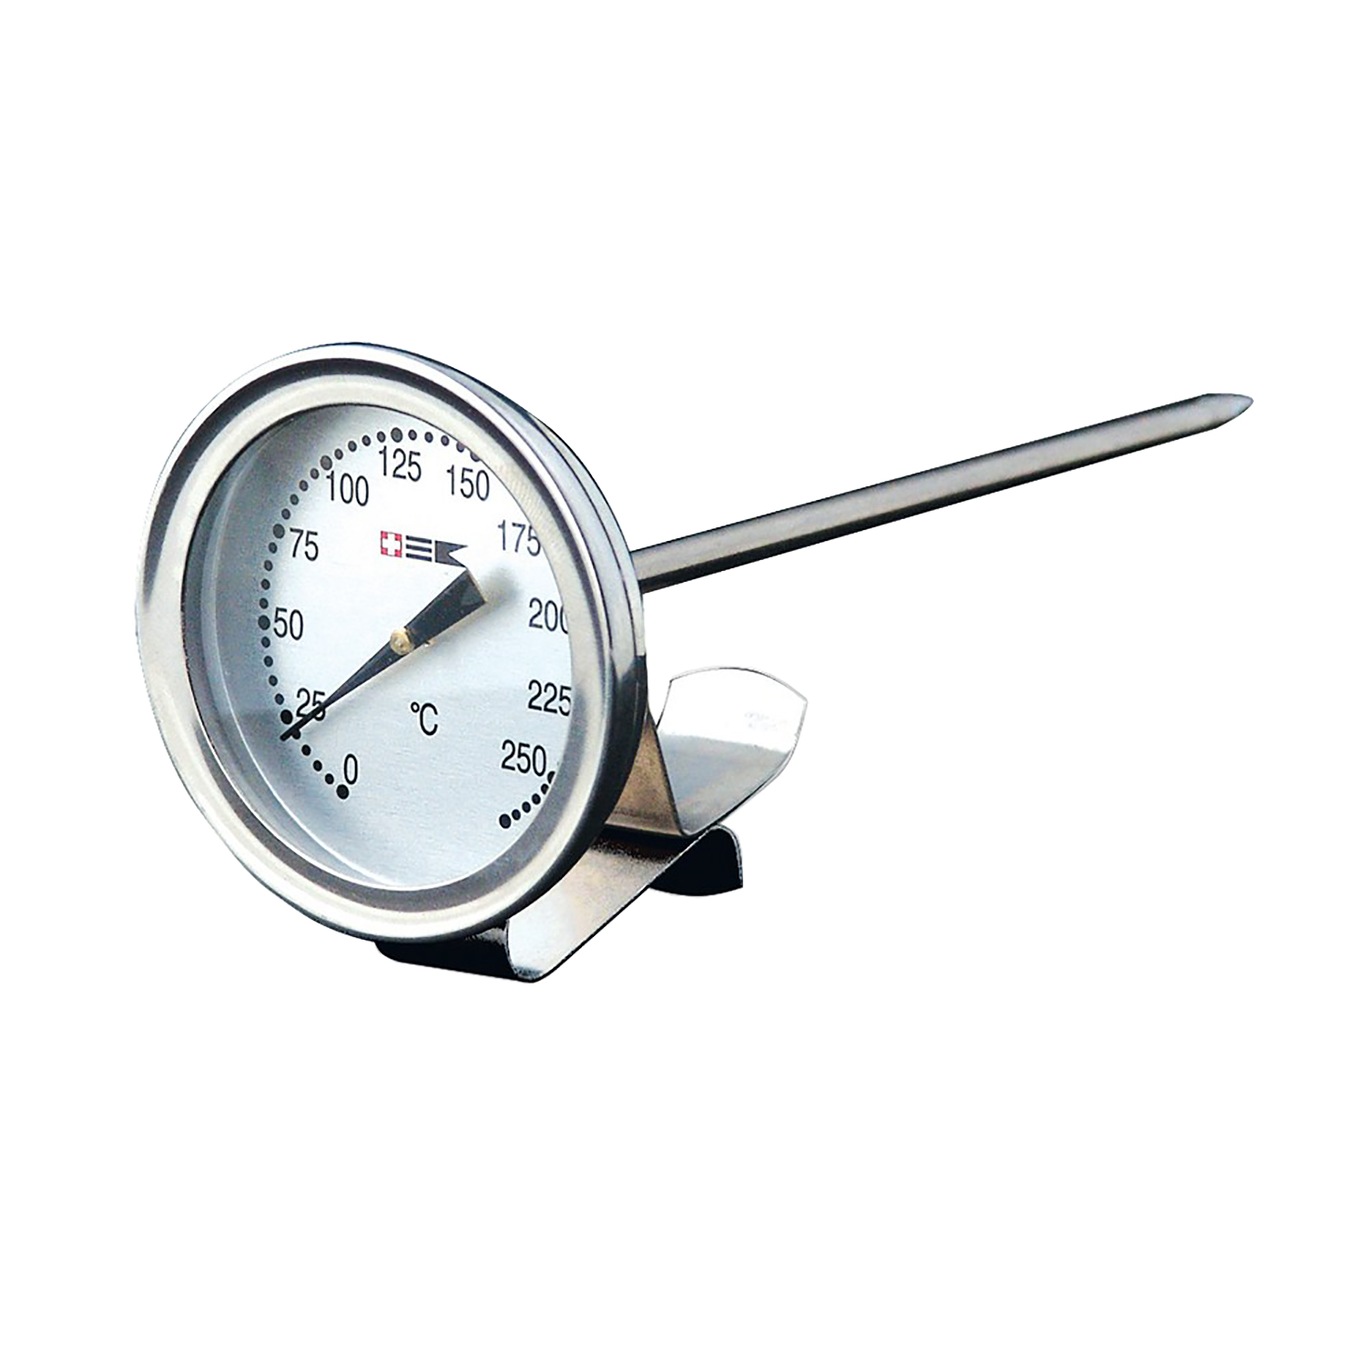 https://royaldesign.com/image/2/bengt-ek-design-deep-fry-thermometer-0-300-c-0?w=800&quality=80